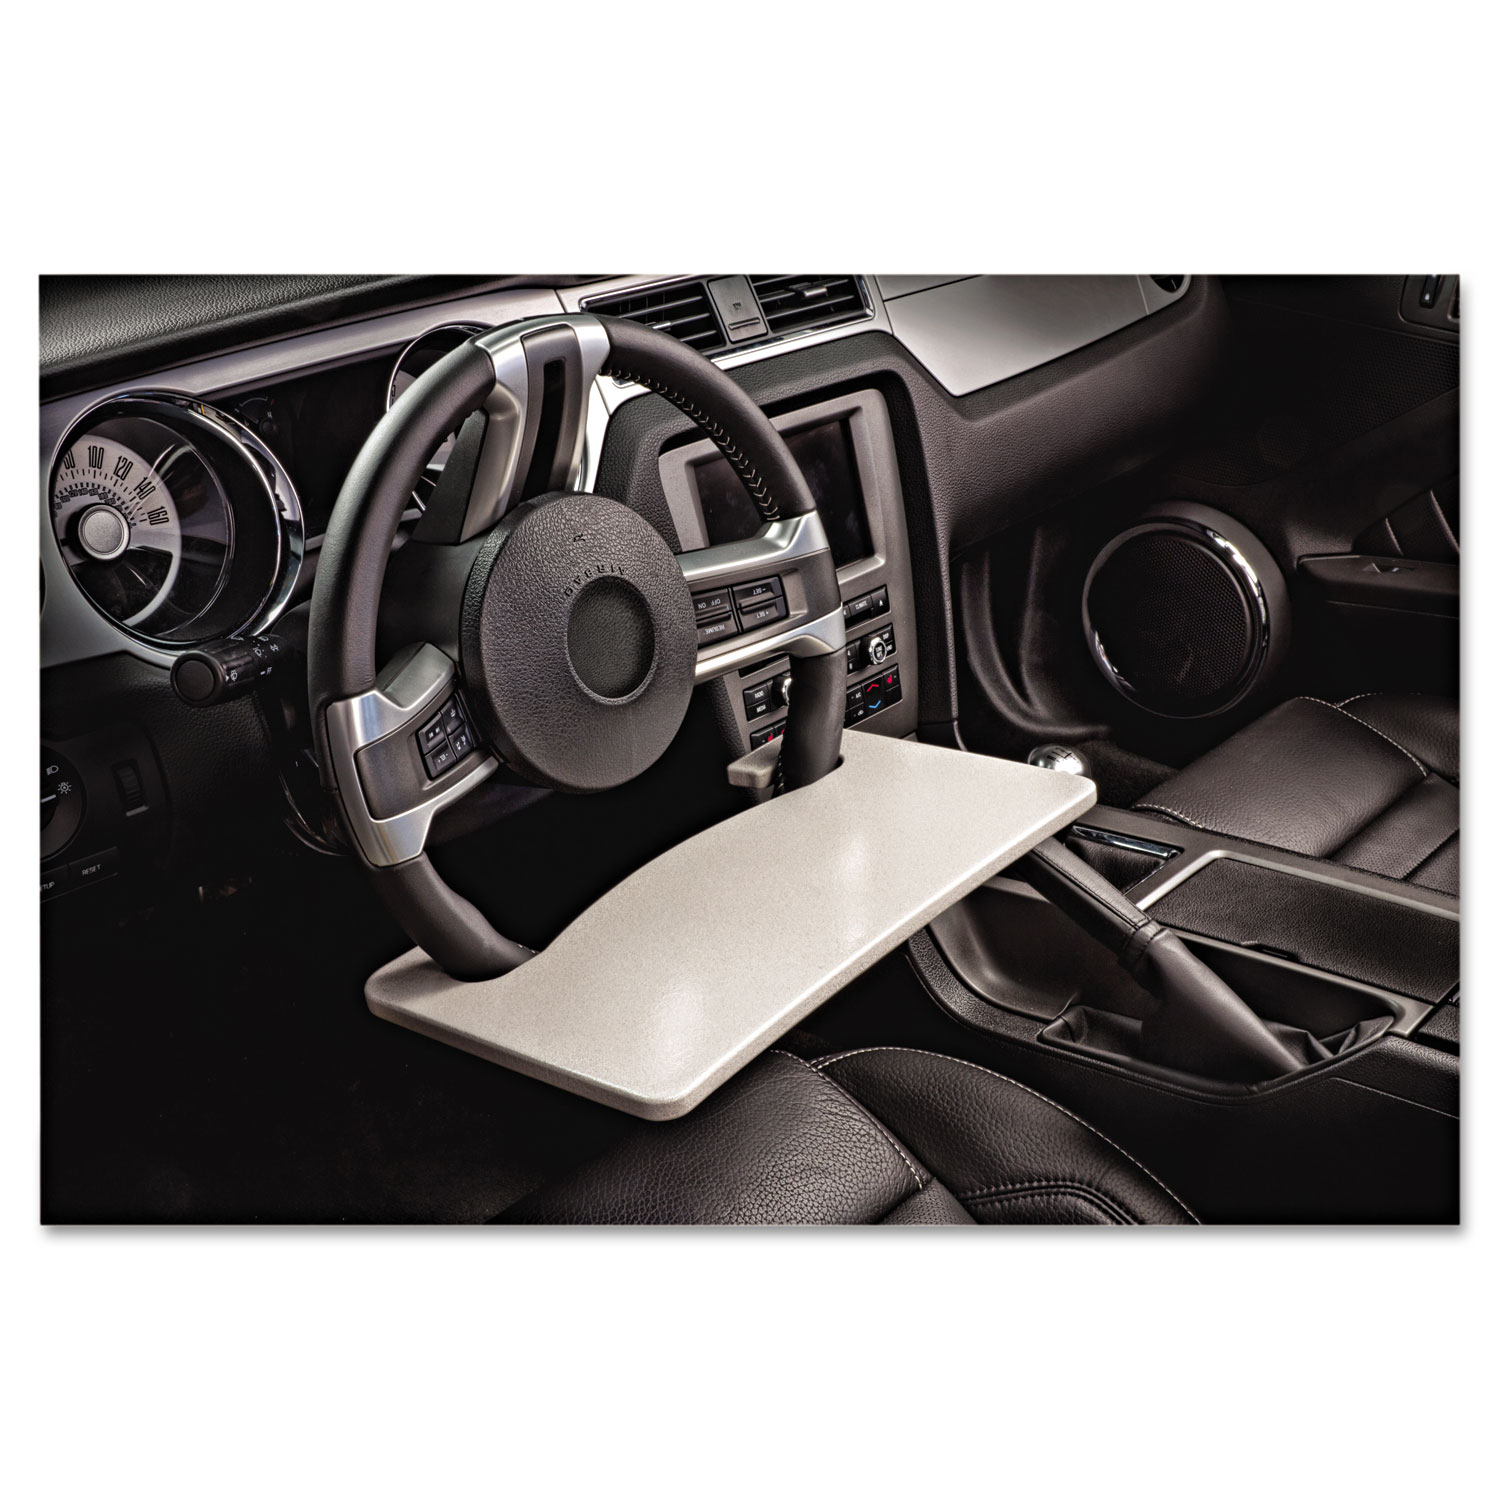  AutoExec 13000 Automobile Steering Wheel Attachable Work Surface, Gray (AUE13000) 